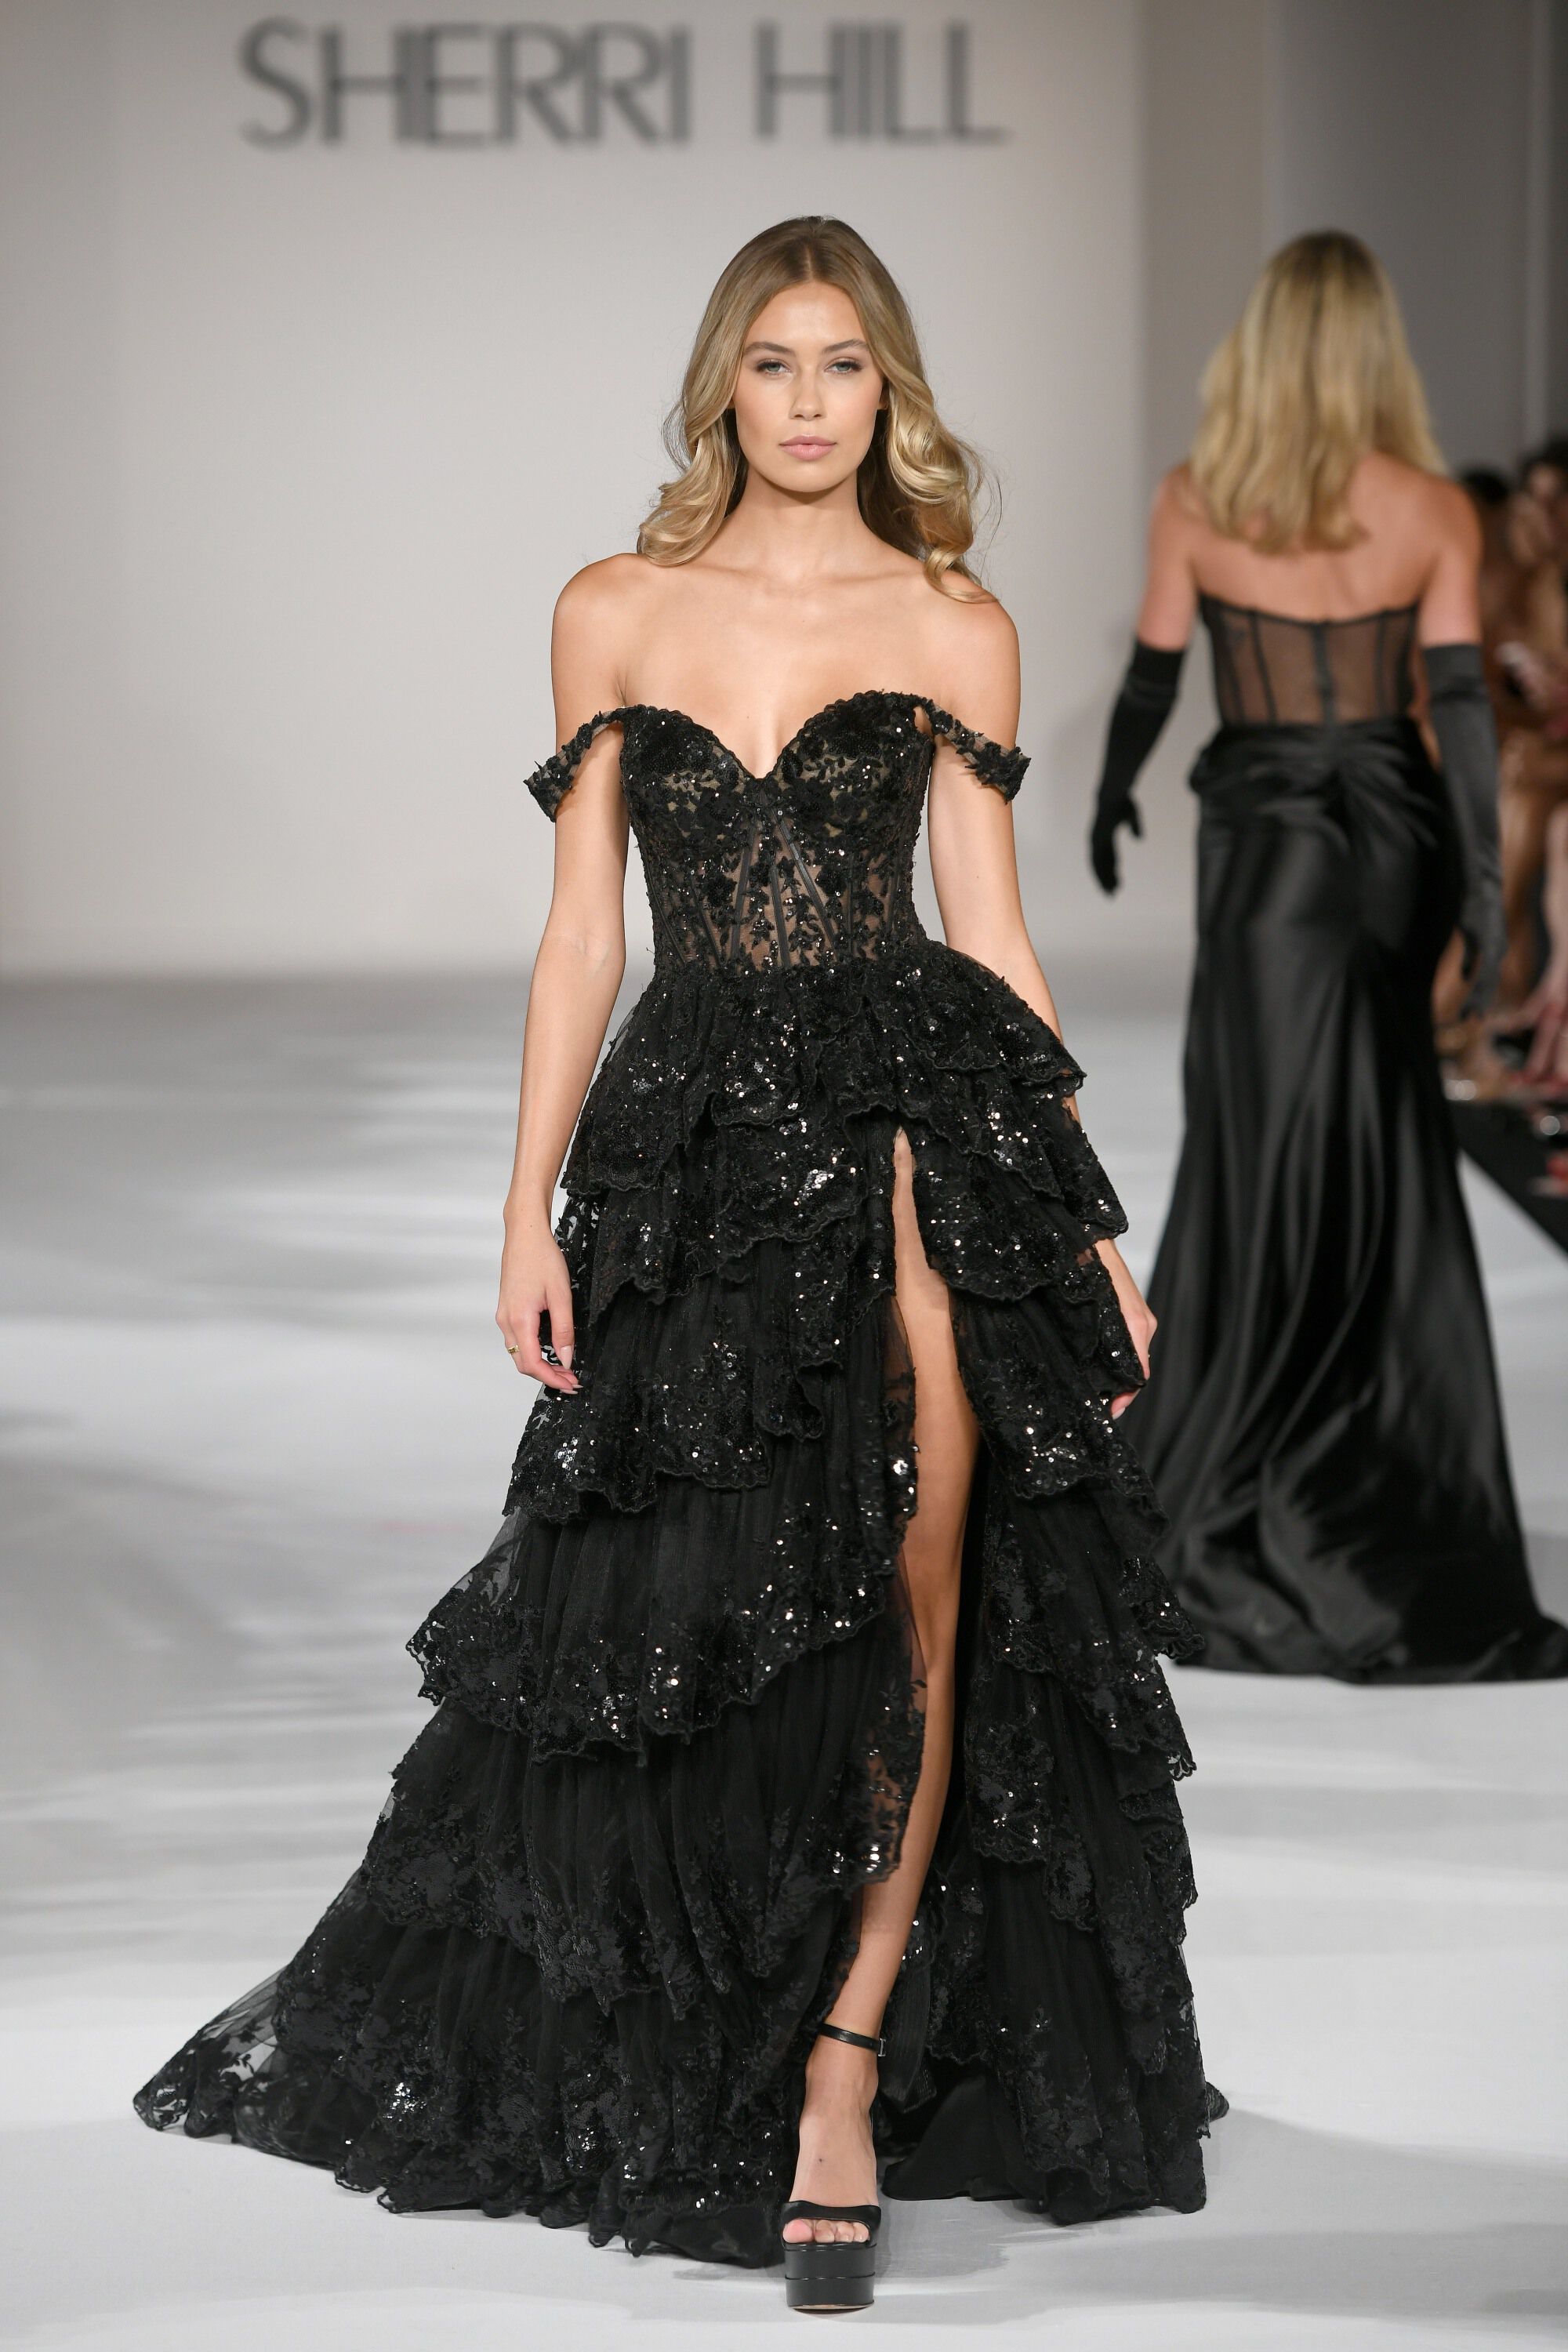 Black Strapless Dress - Sheer Lace Dress - Ruffled Dress - Dress